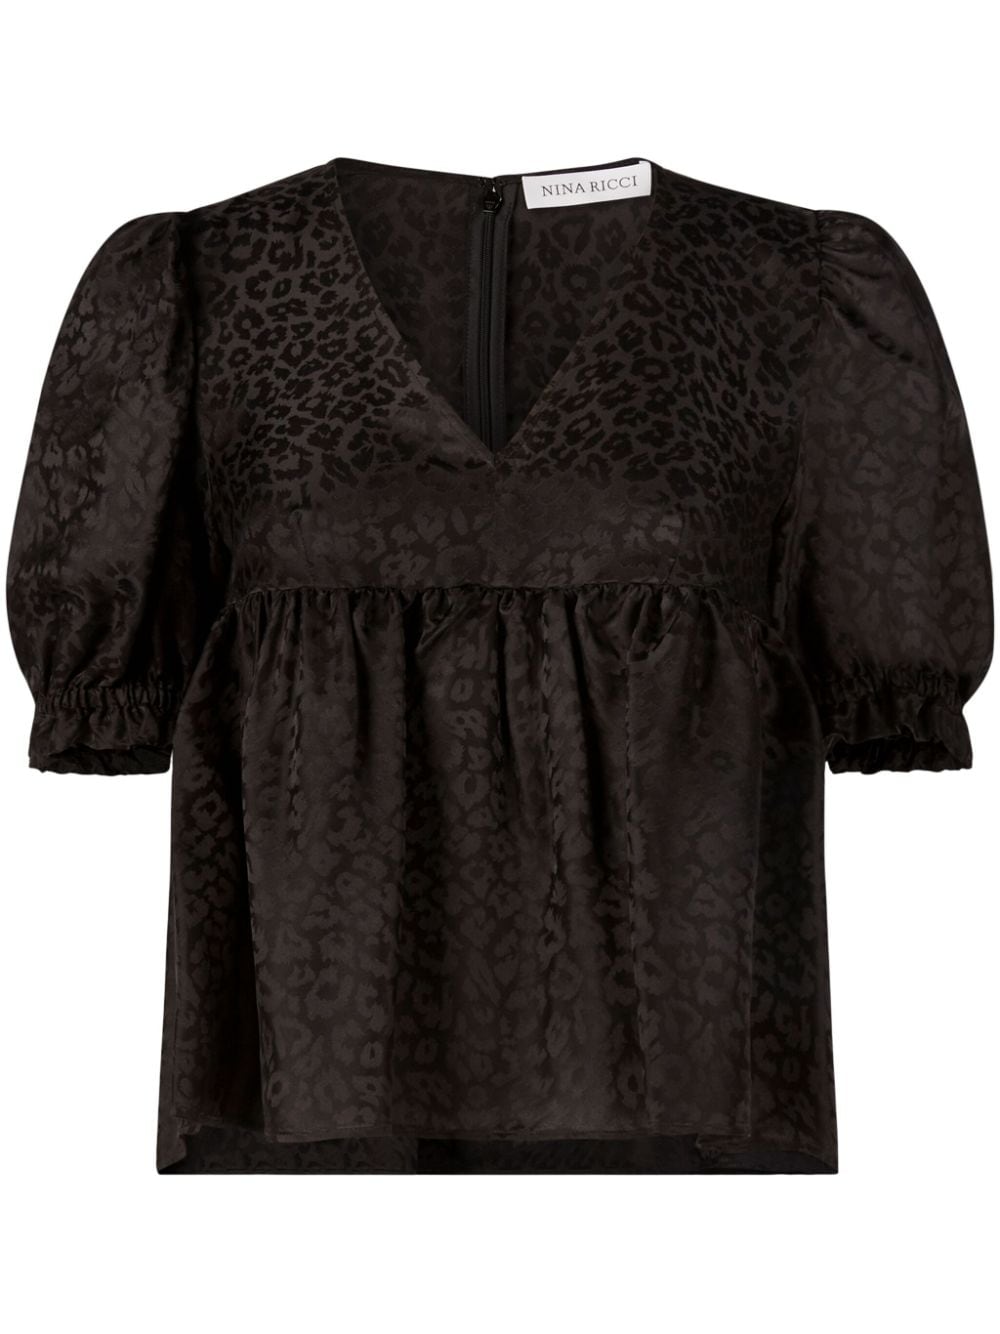 Image 1 of Nina Ricci leopard-jacquard babydoll blouse